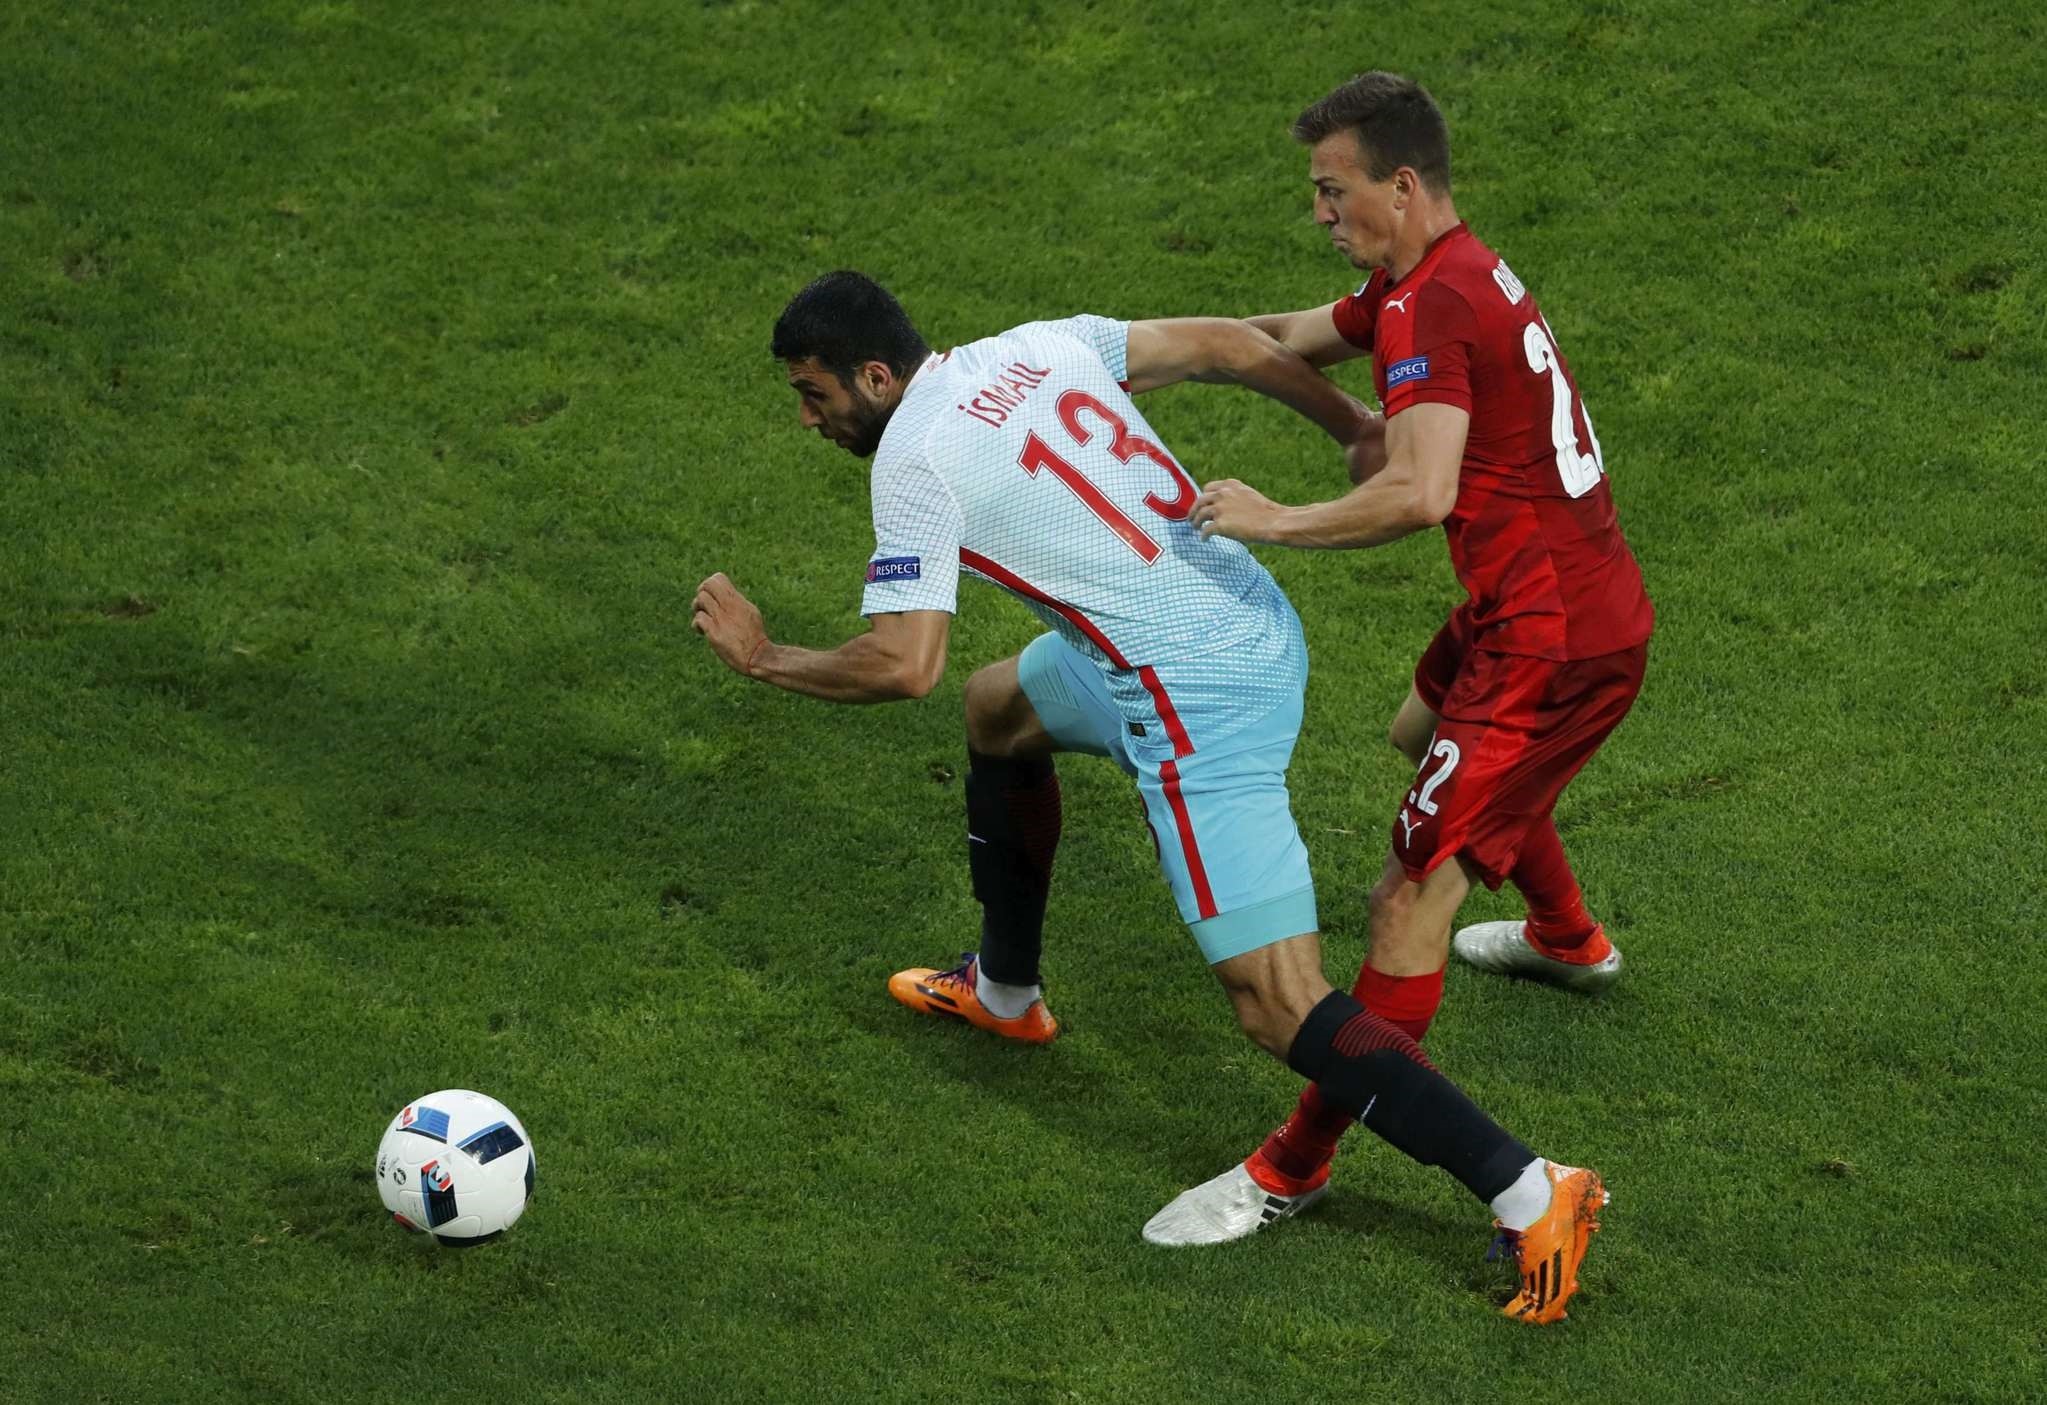 Czech Republic's Vladimir Darida and Turkey's Ismail Ku00f6ybau015fu0131 in action (Reuters Photo)